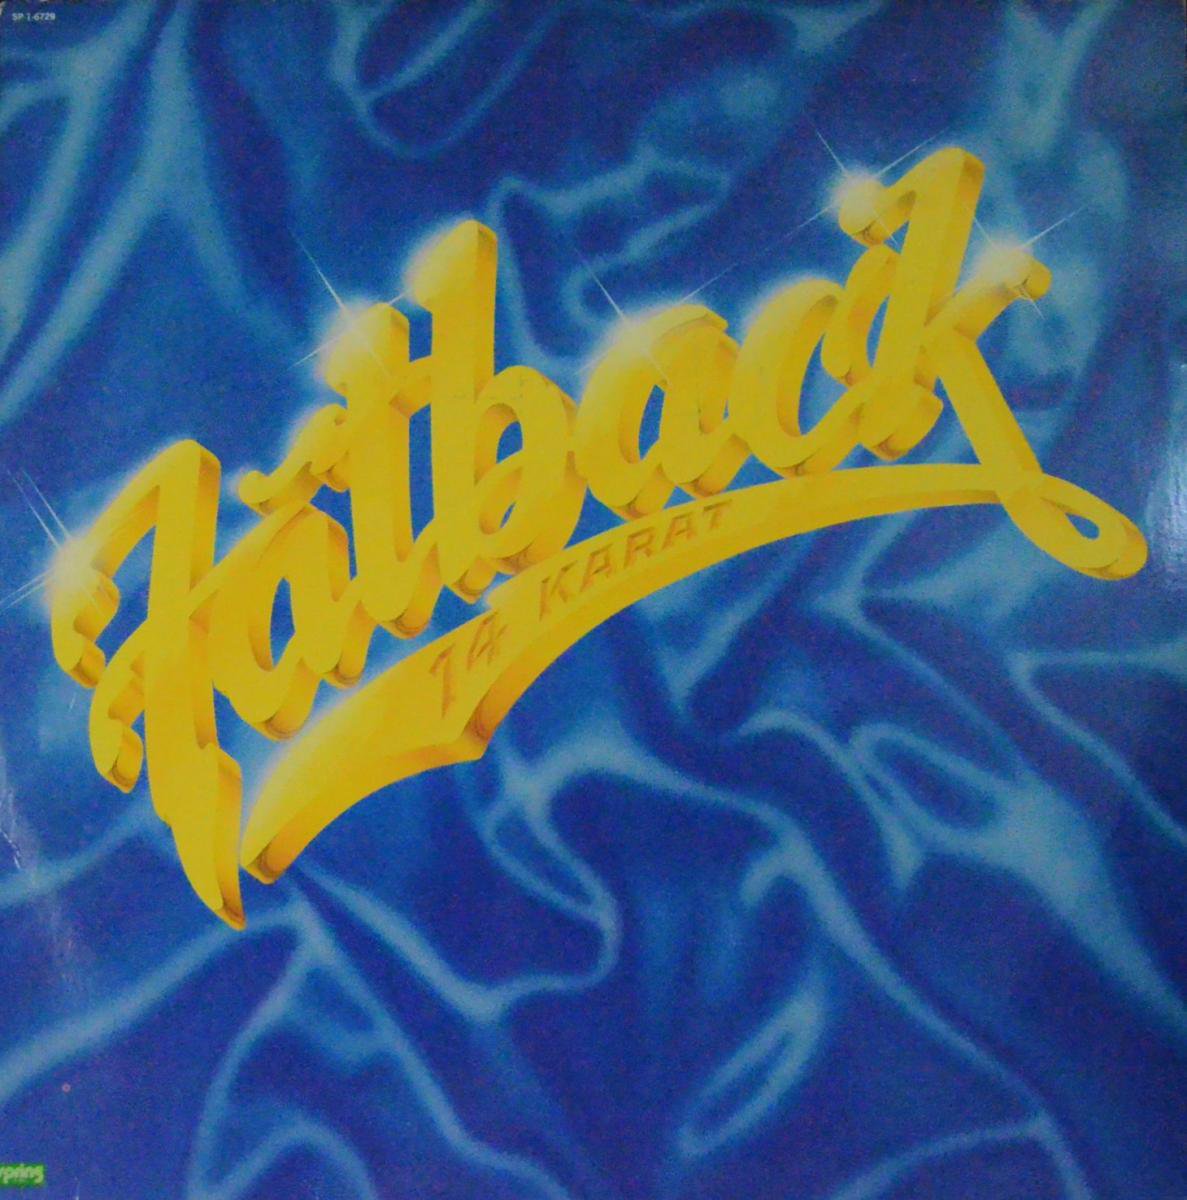 FATBACK / 14 KARAT (LP)